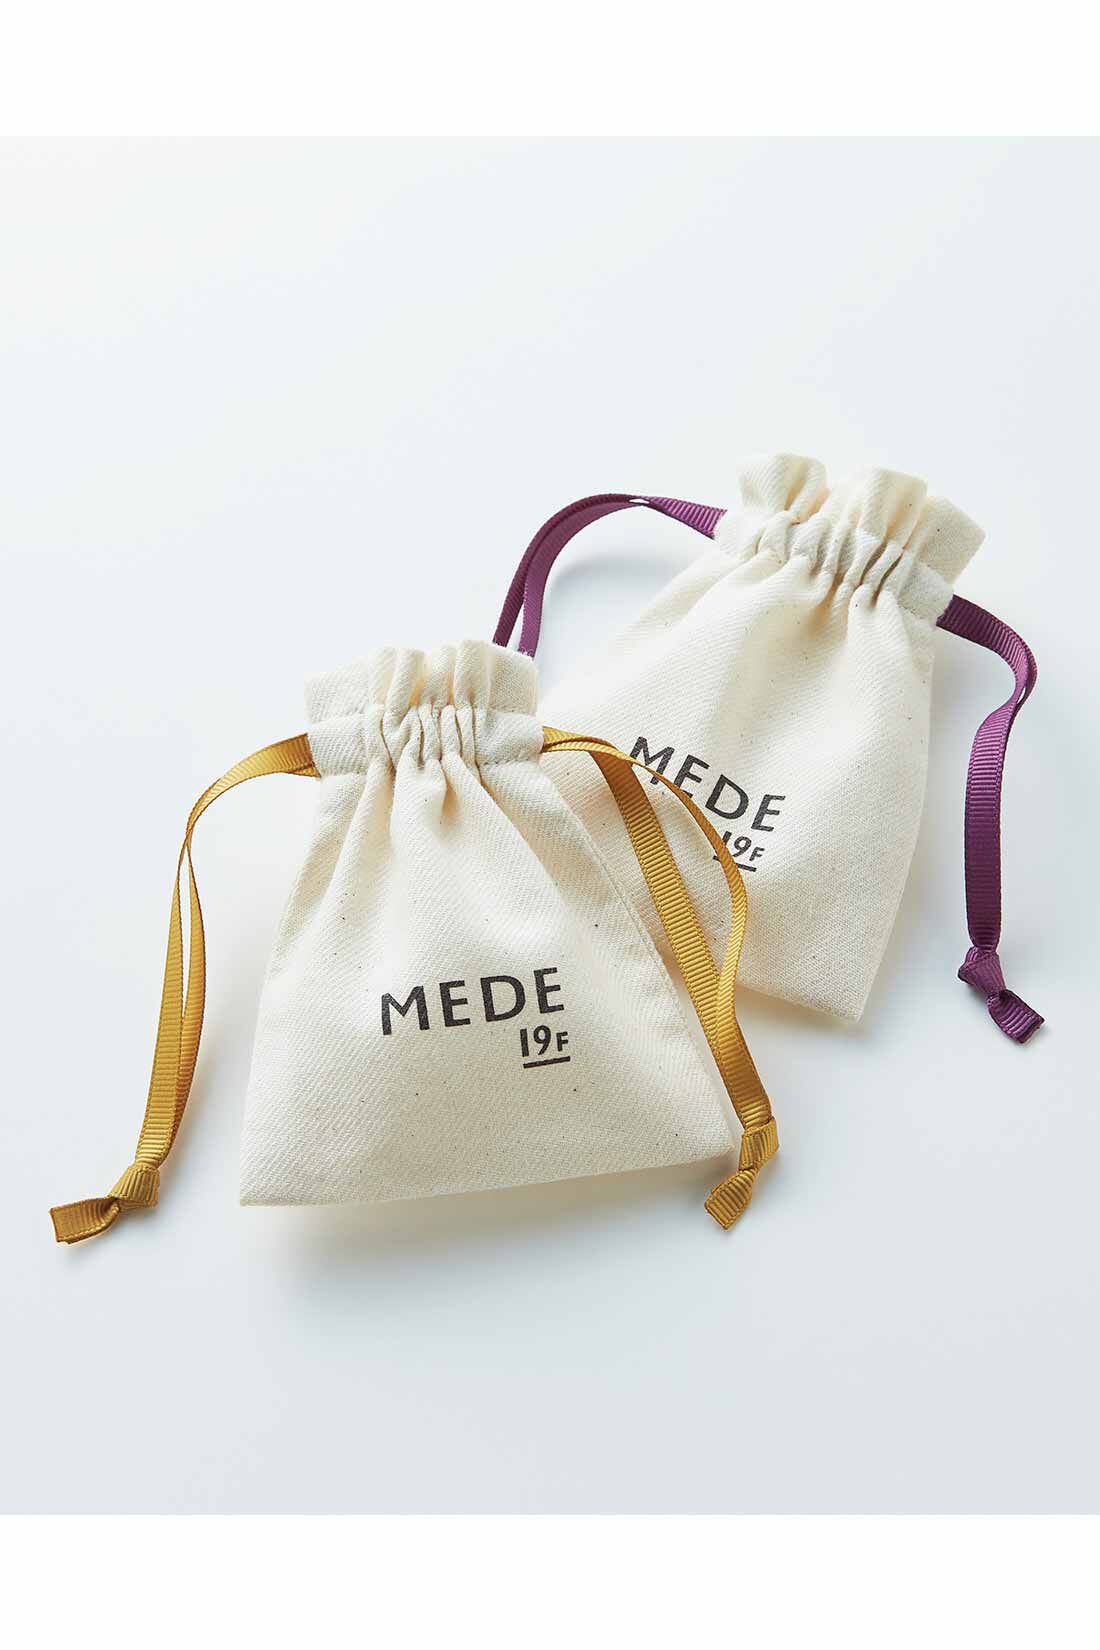 MEDE19F|YPAC for MEDE19F　フランス製陶器ボタンイヤリング type.19|MEDE19Fオリジナルきんちゃくに入れてお届けします。